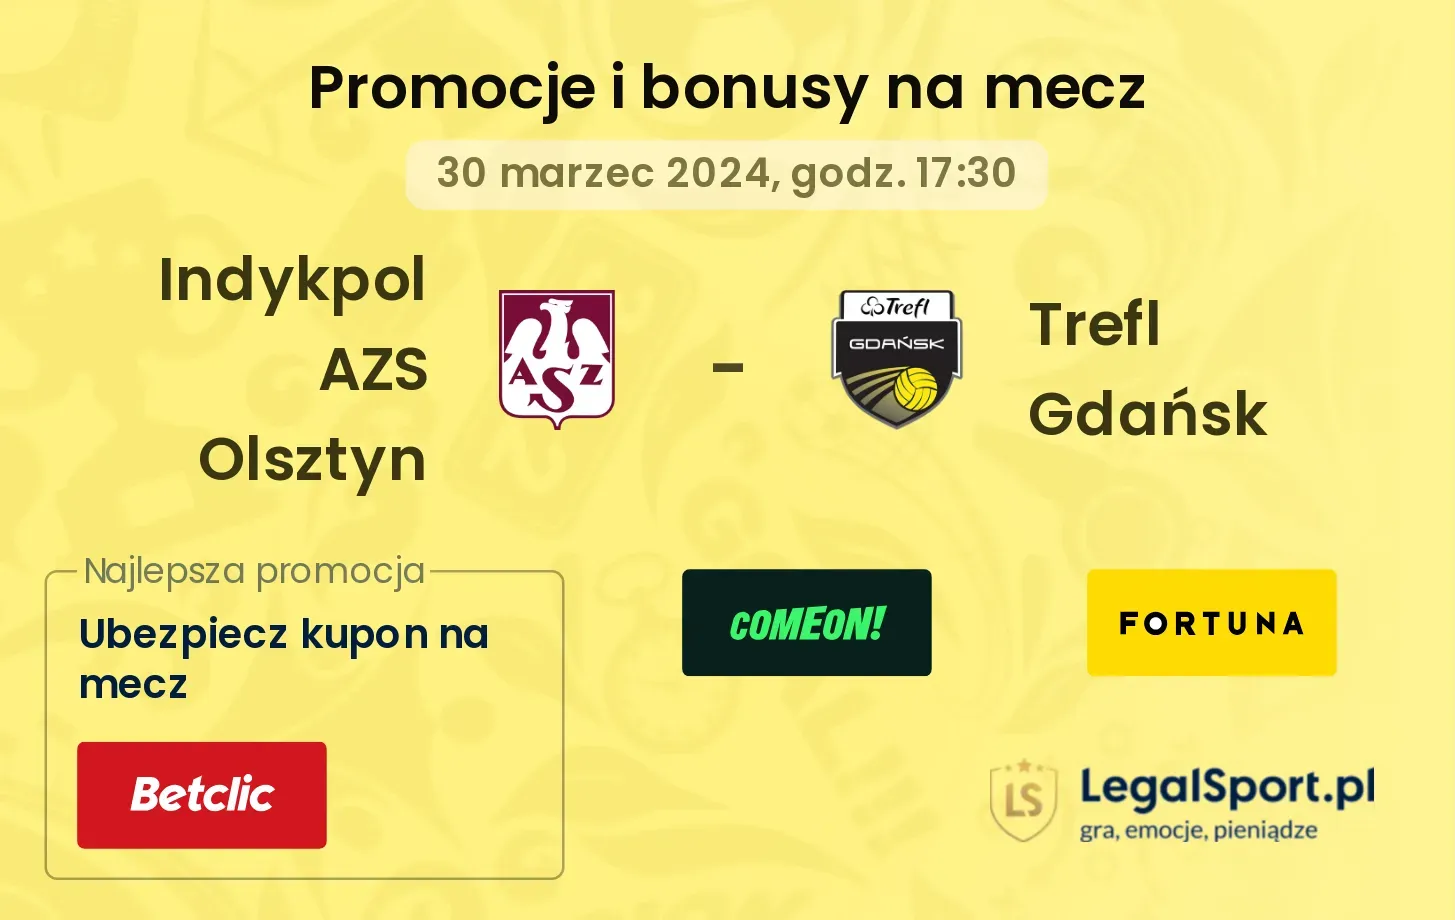 Indykpol AZS Olsztyn - Trefl Gdańsk promocje bonusy na mecz